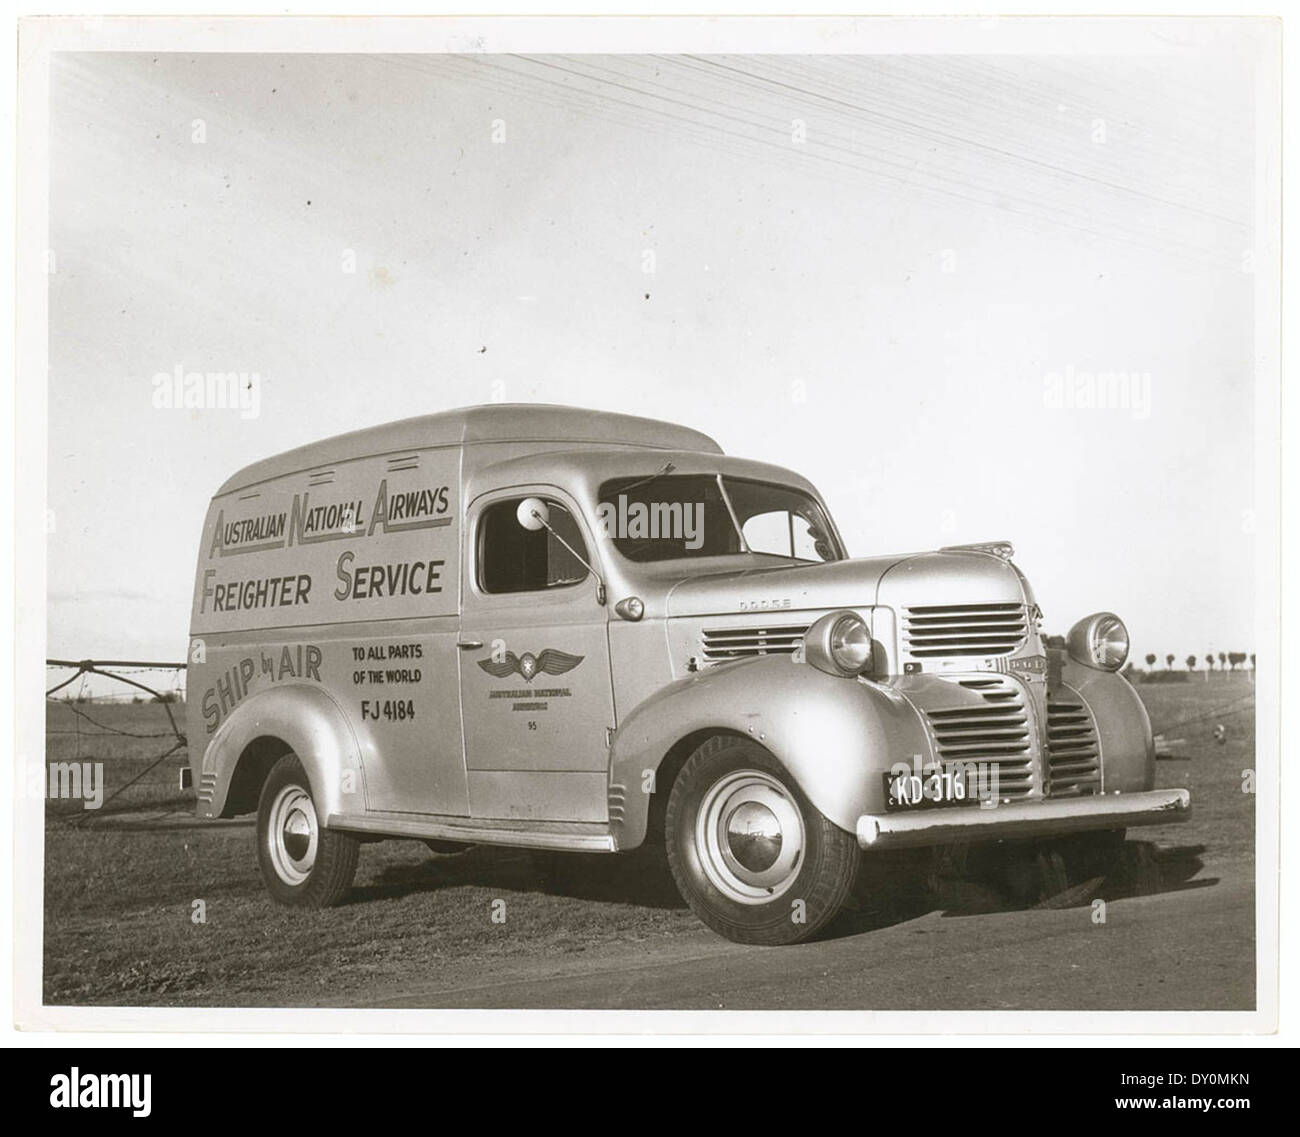 Australian National Airways Freighter Service van, 1946 model / ANA Publicity Dept Stock Photo